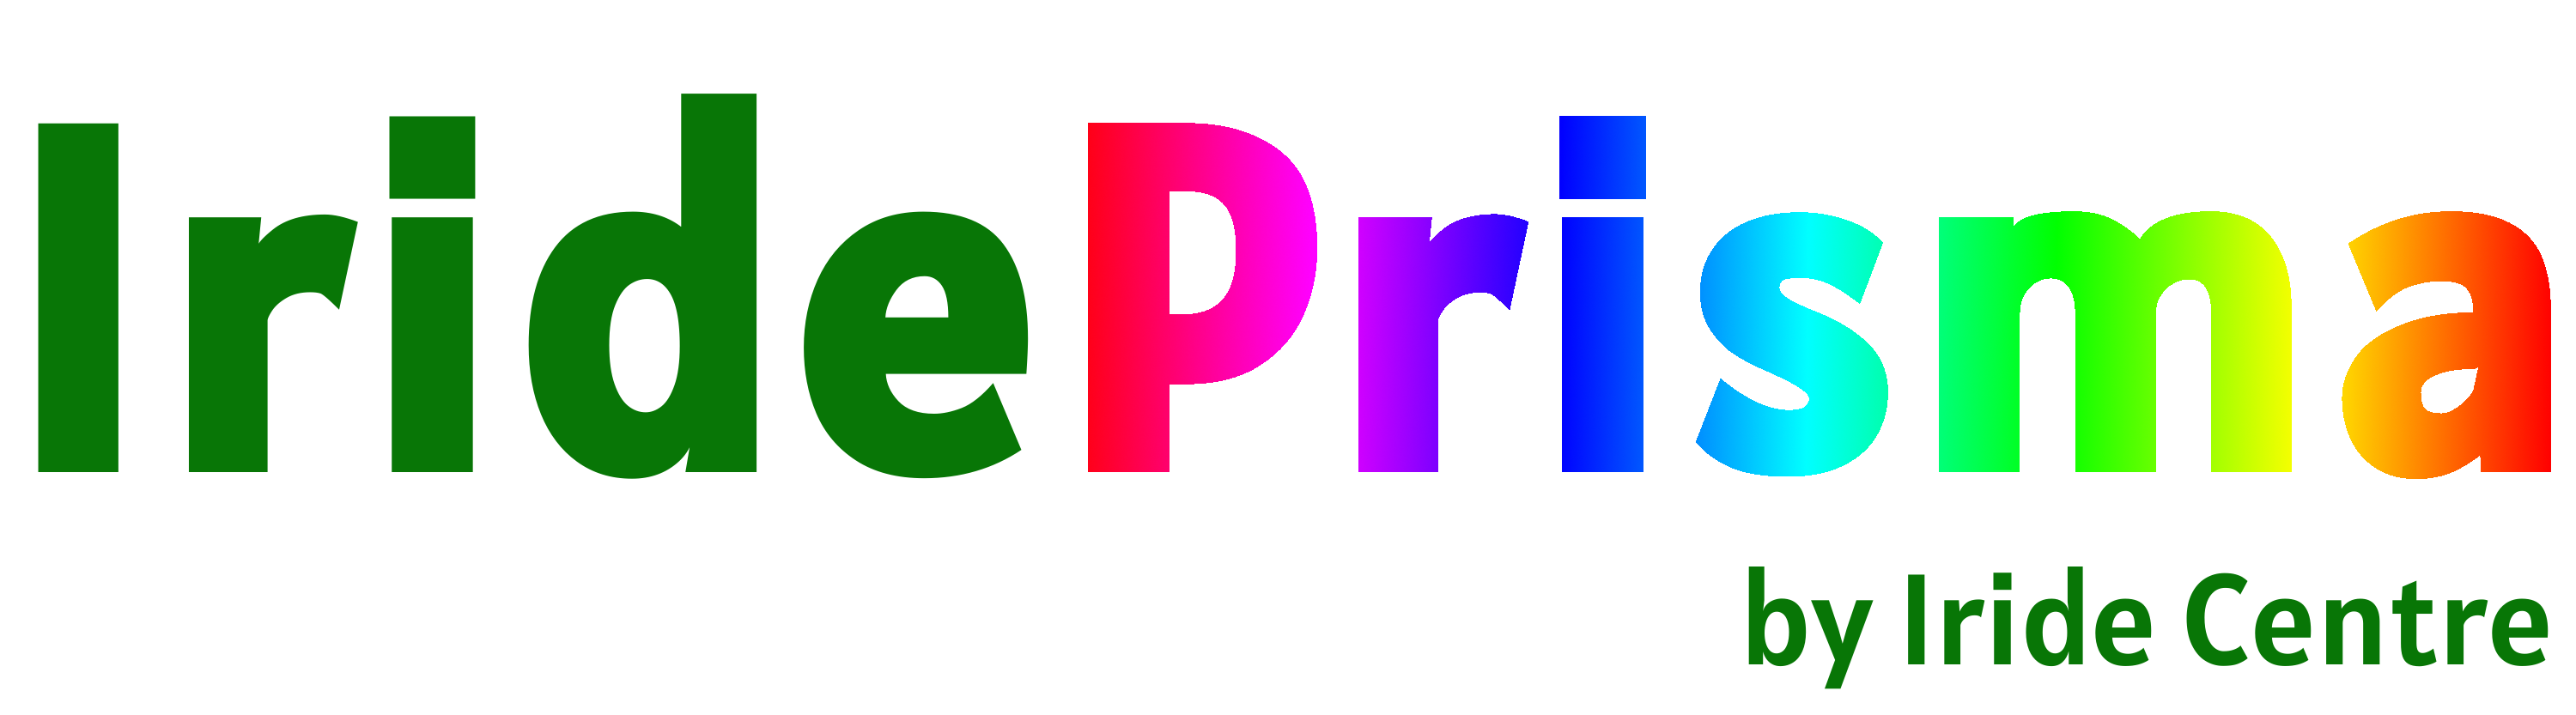 Logo Prisma nema pozadinu